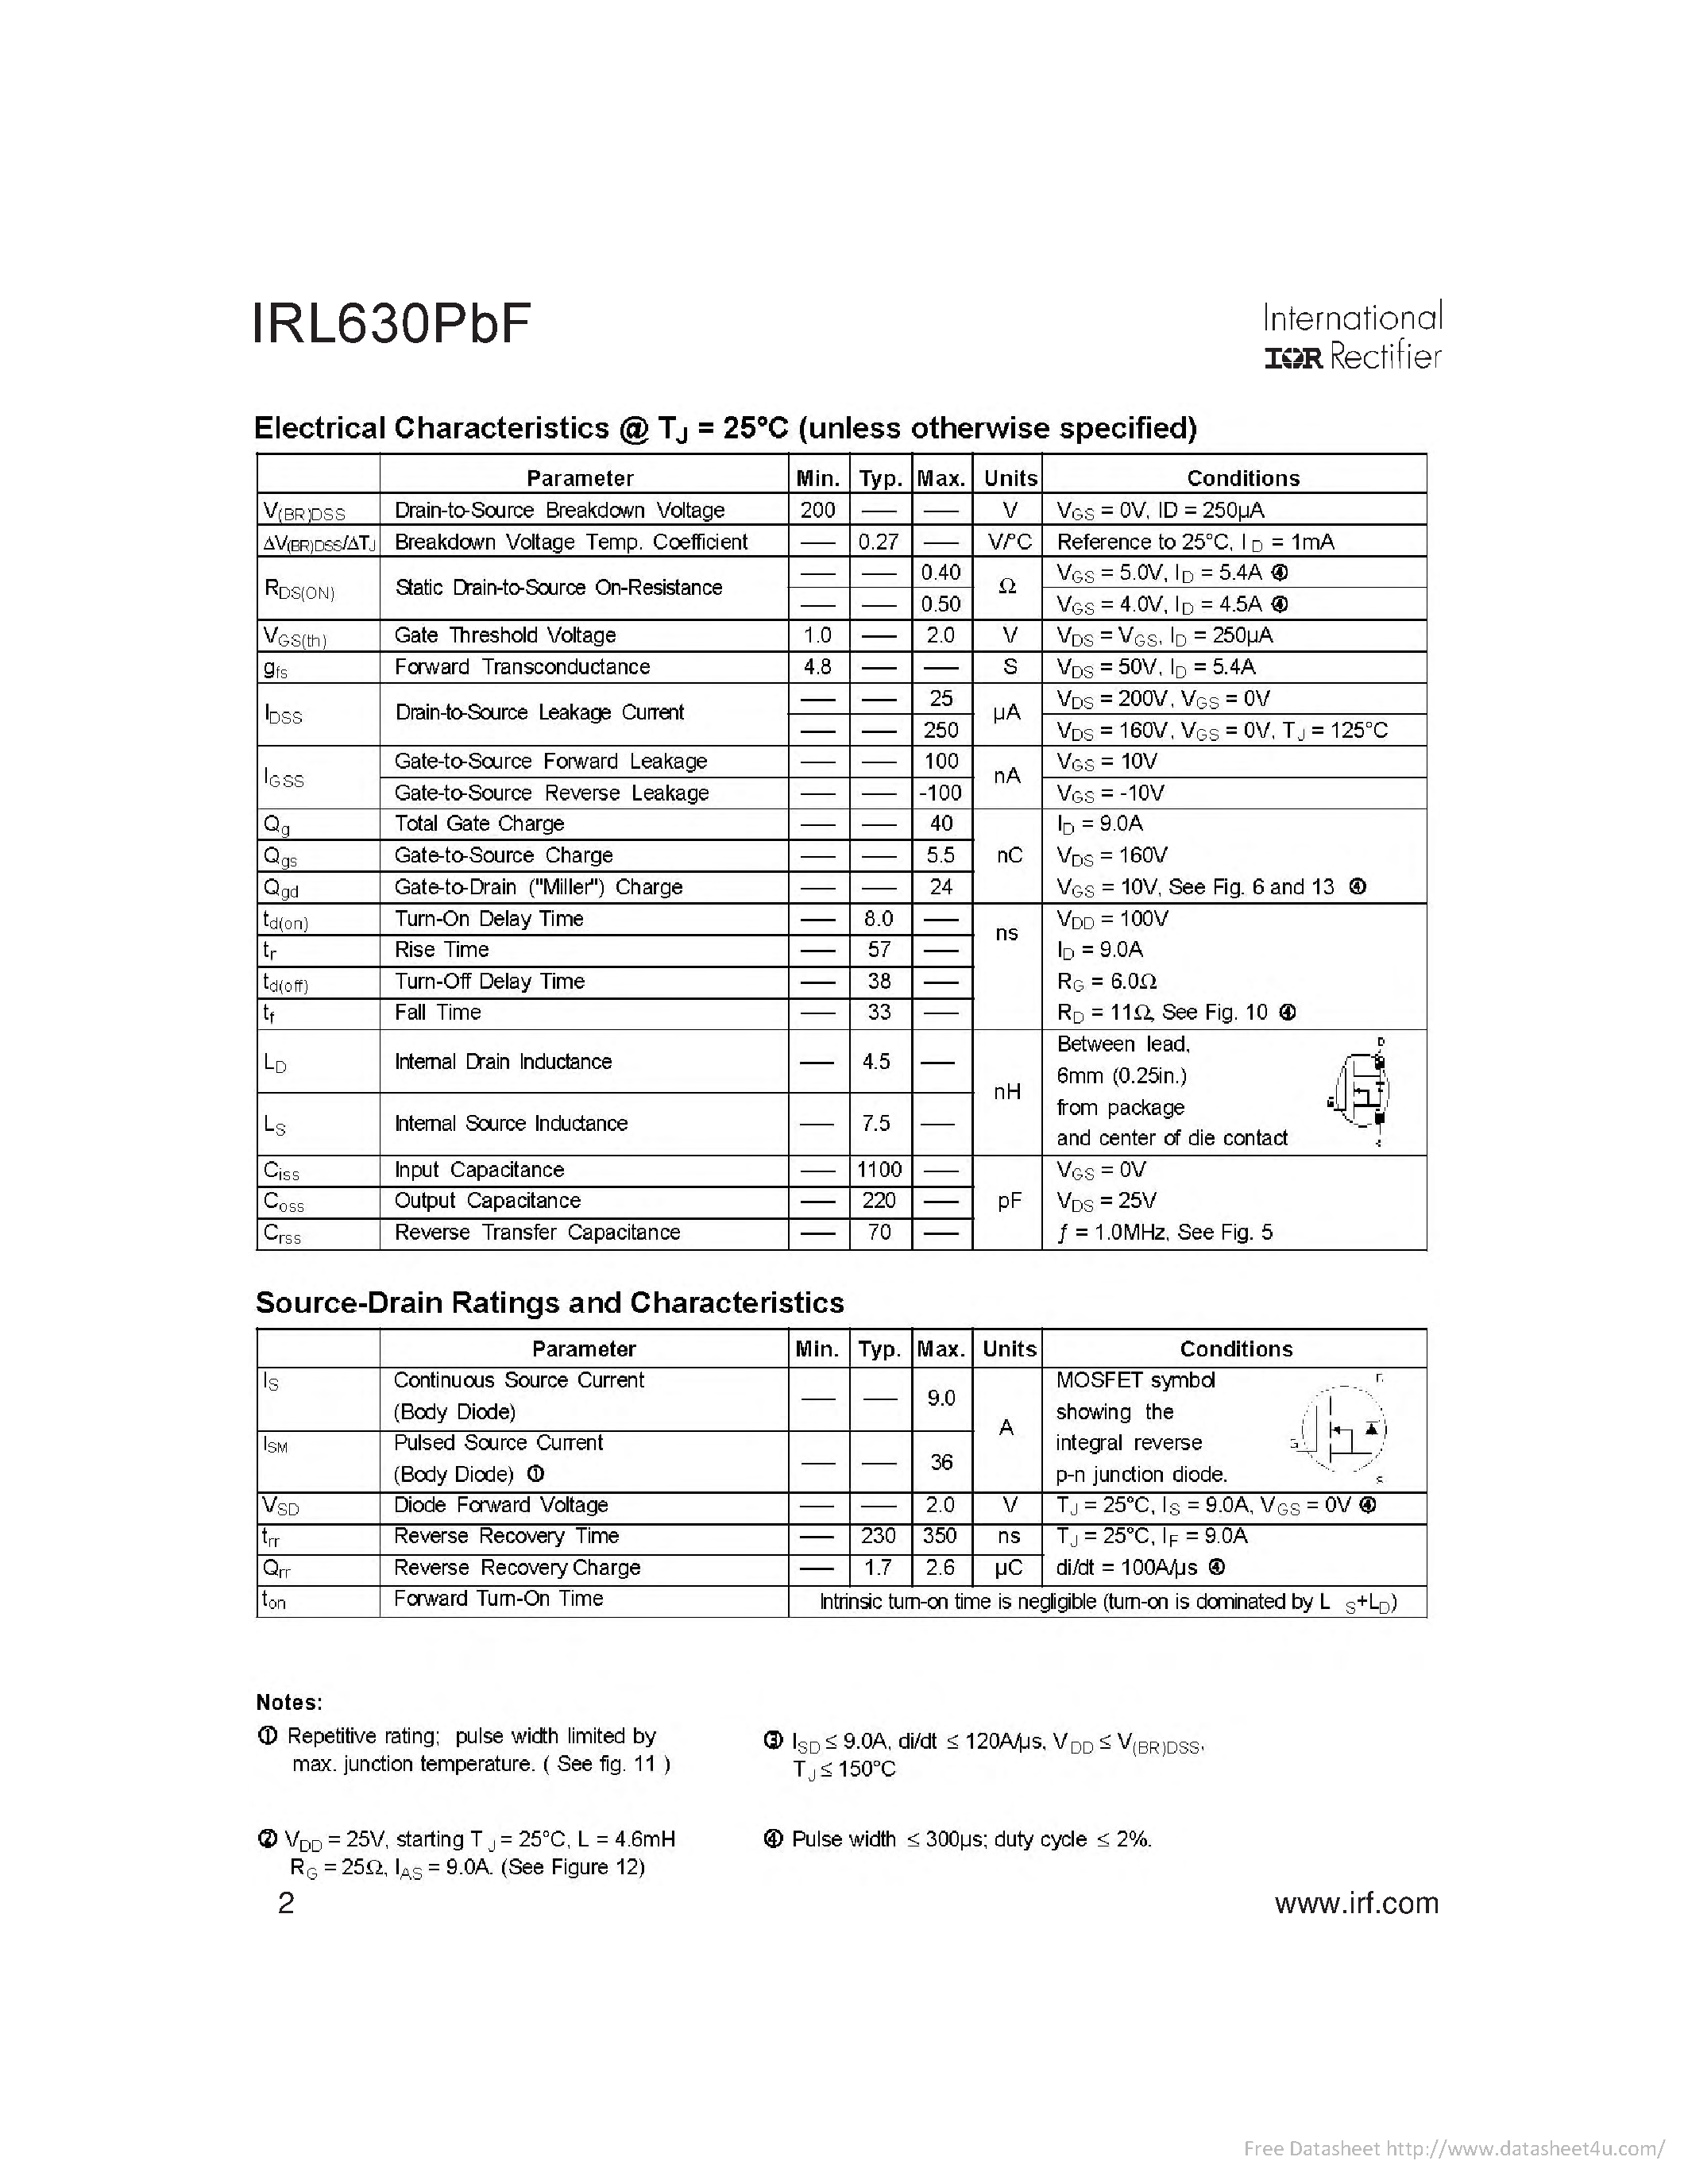 Datasheet IRL630PBF - page 2